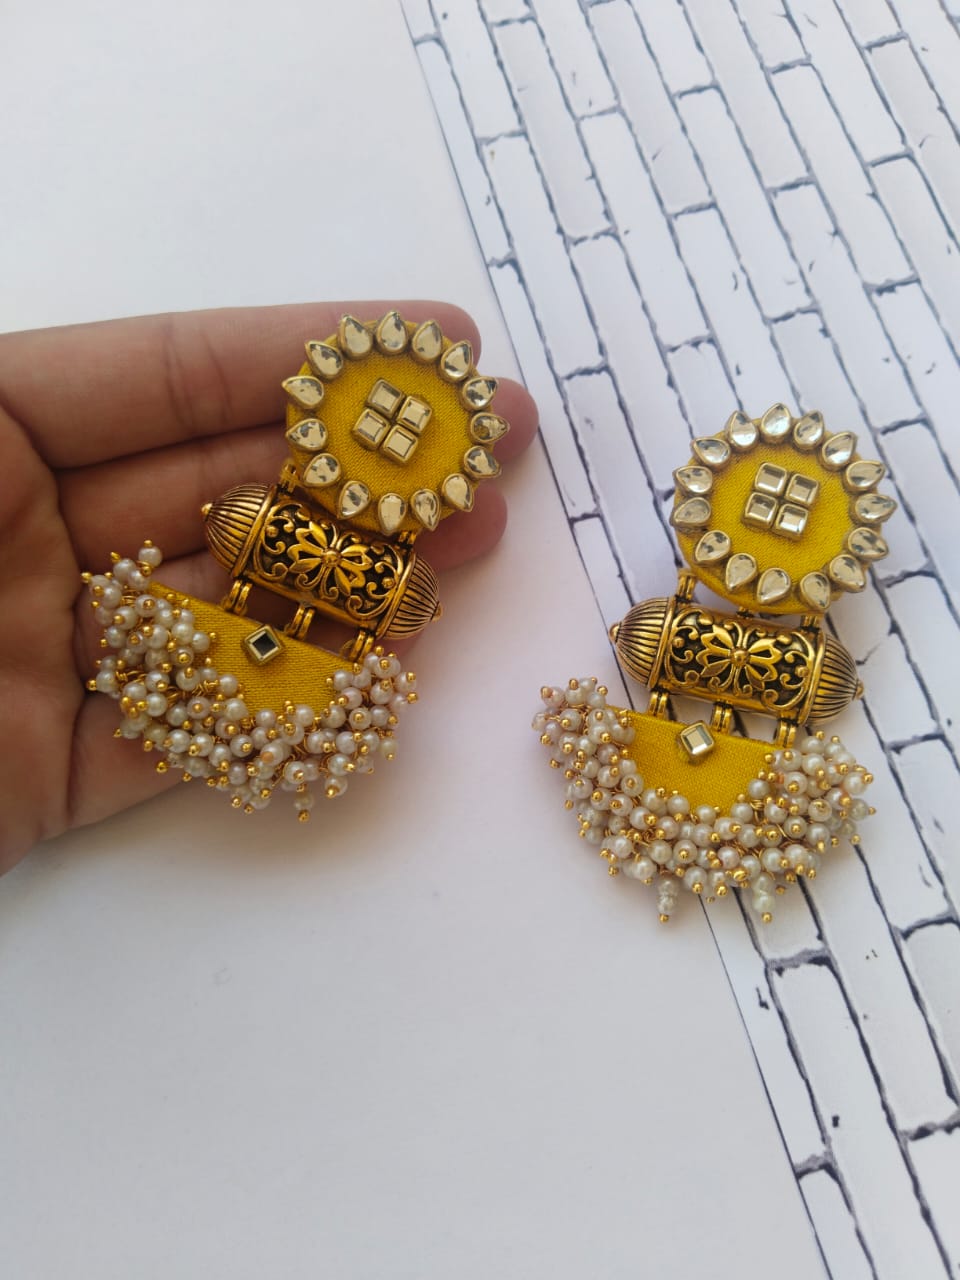 Bright lemon yellow jhumka earrings with kundan work, golden tabiz and white beads on white backdrop